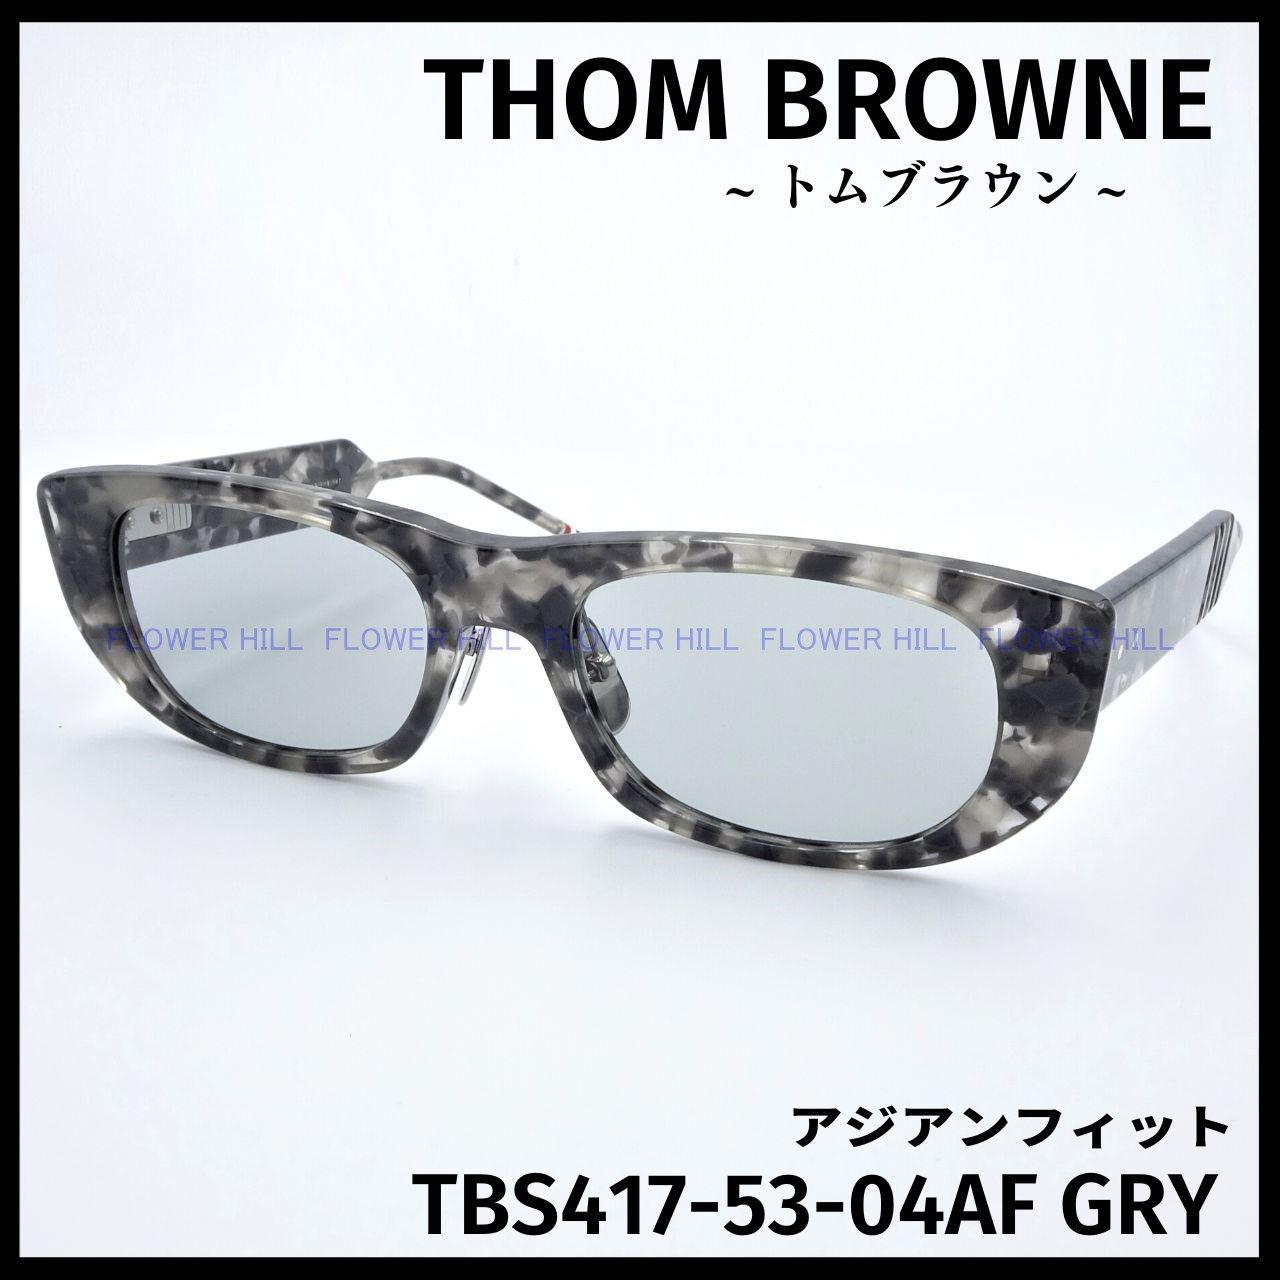 THOM BROWNE トムブラウン サングラス TBS417-53-04AF GRY グレーハバナ 日本製 メンズ レディース